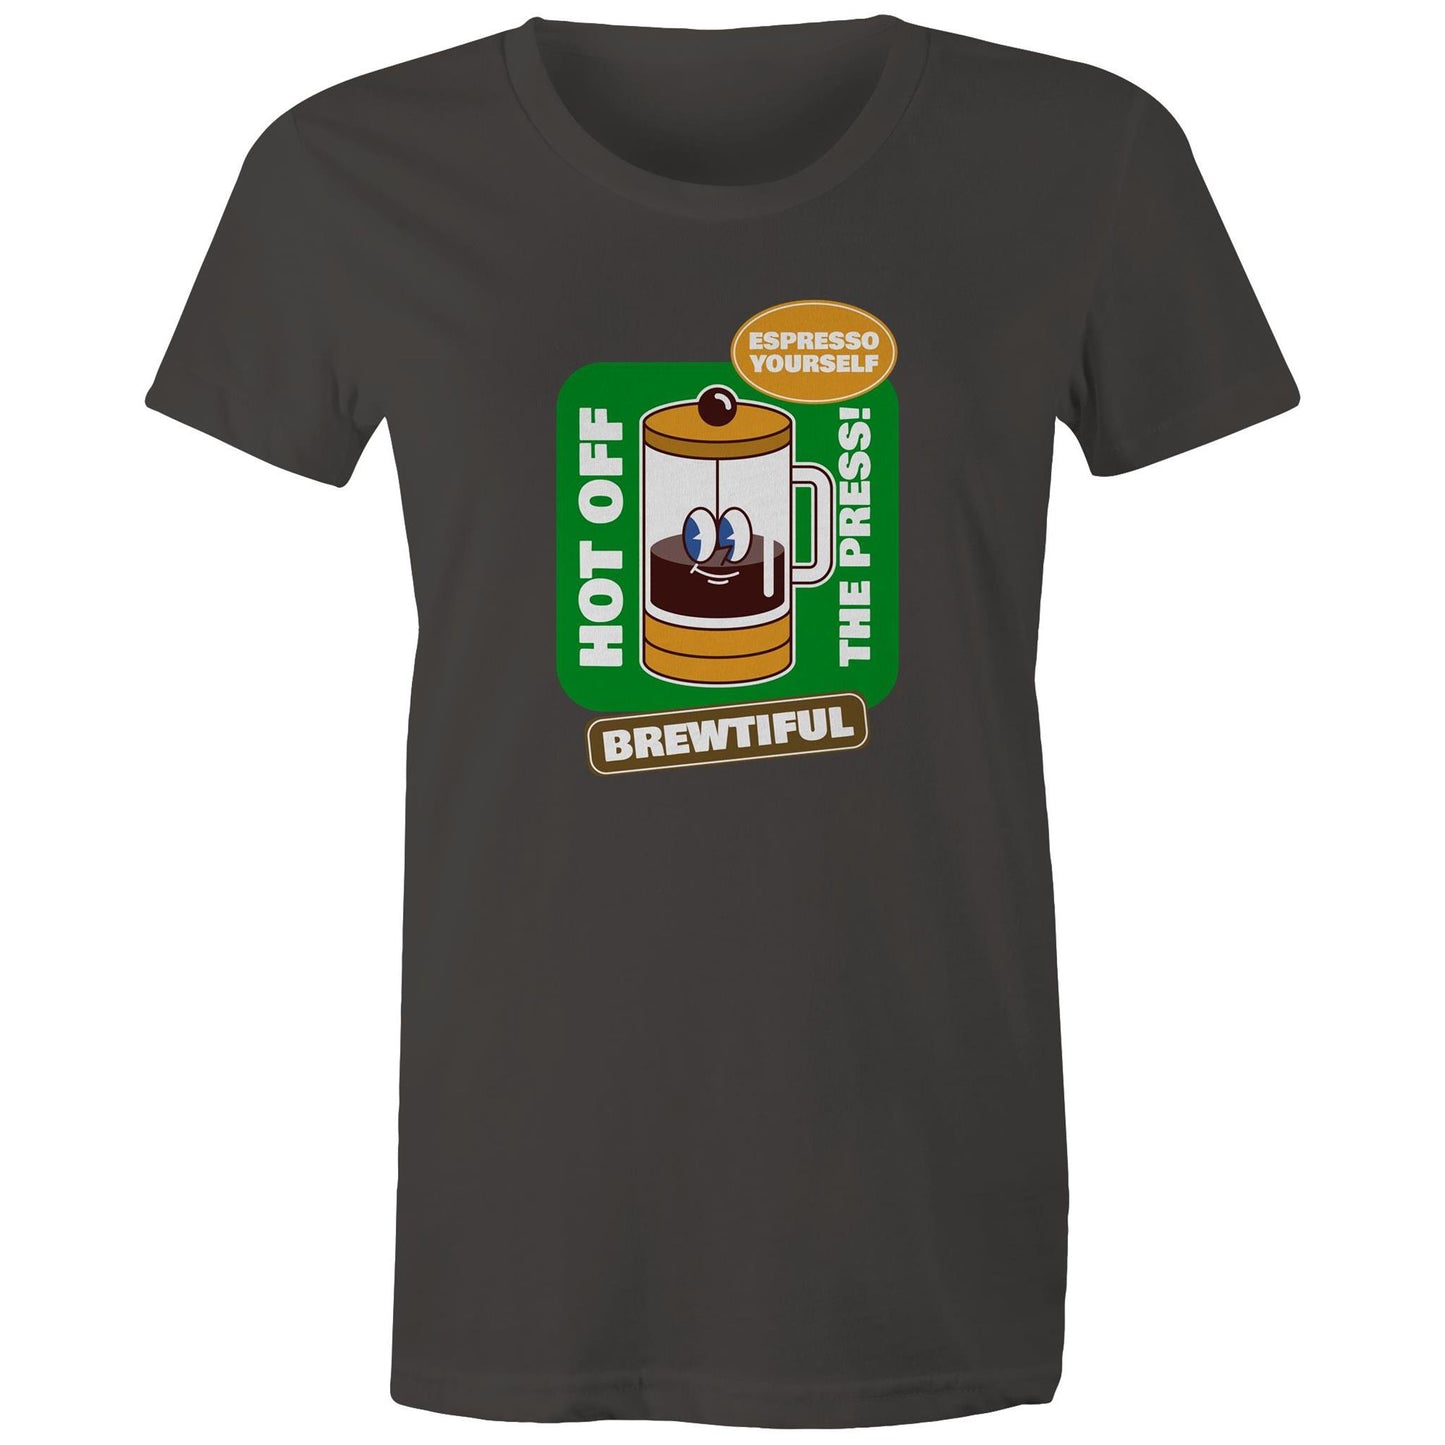 Brewtiful, Espresso Yourself - Womens T-shirt Charcoal Womens T-shirt Coffee